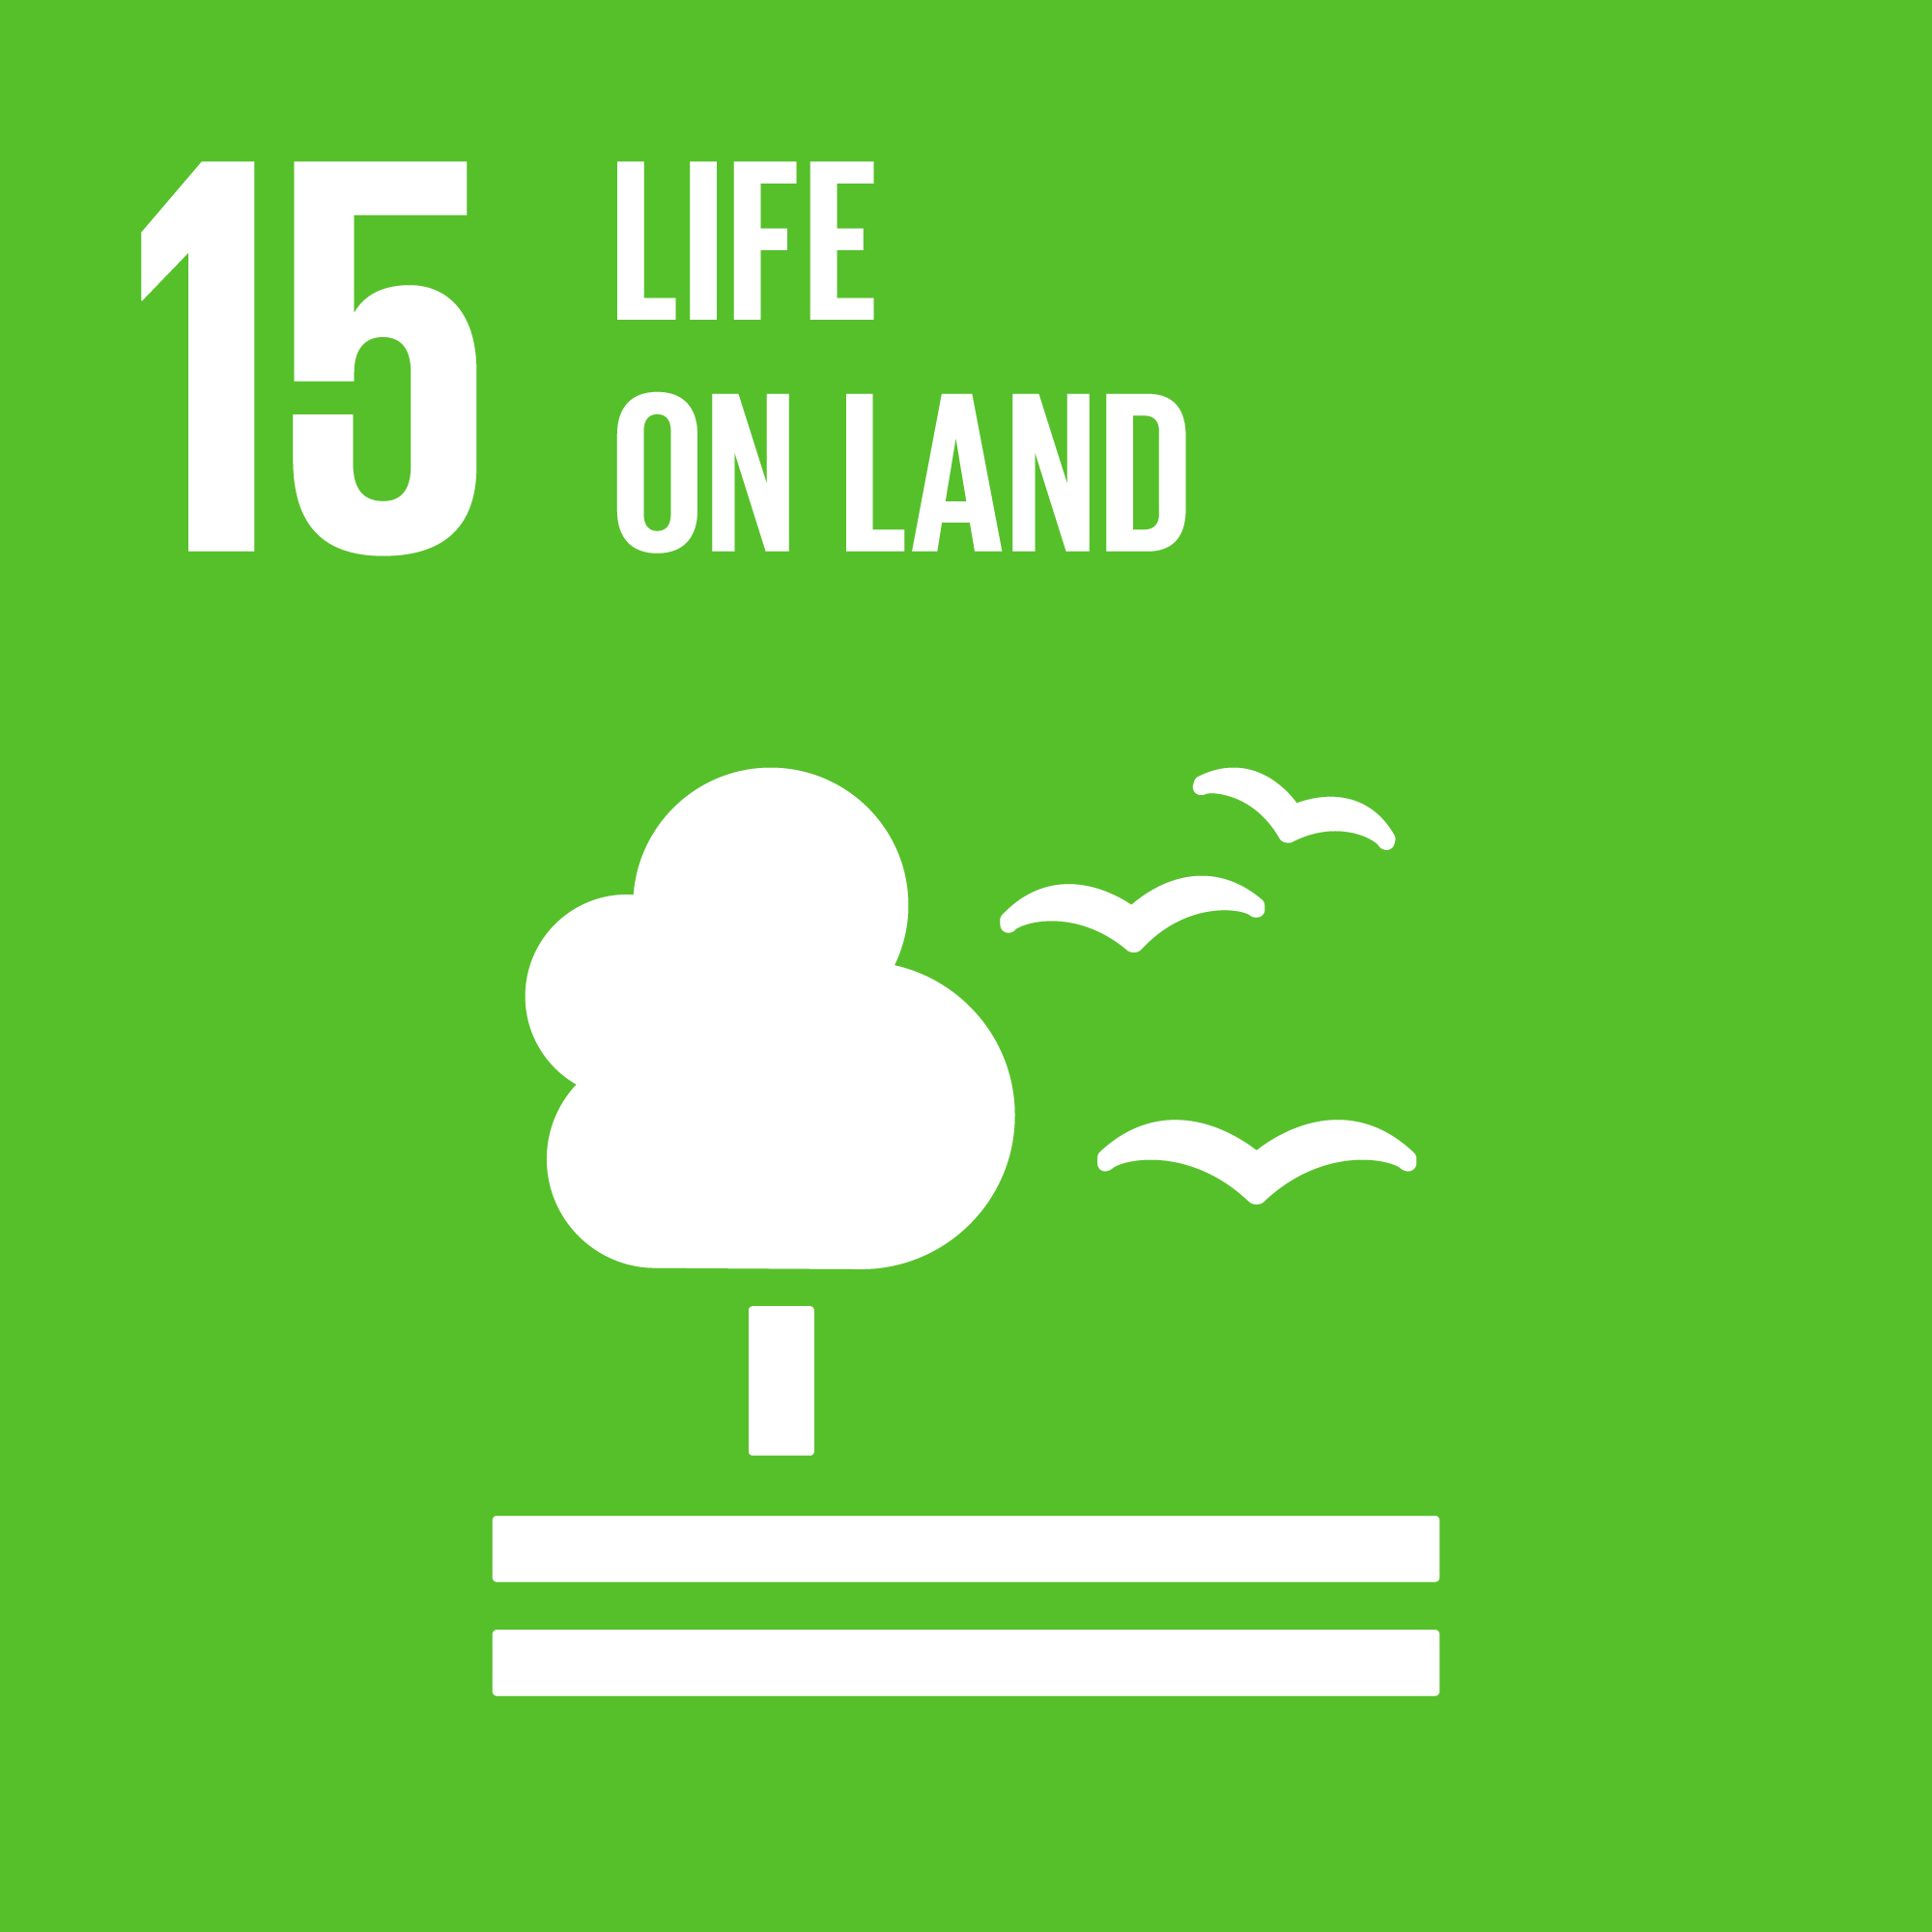 Sustainable Development Goal 15: Life on Land